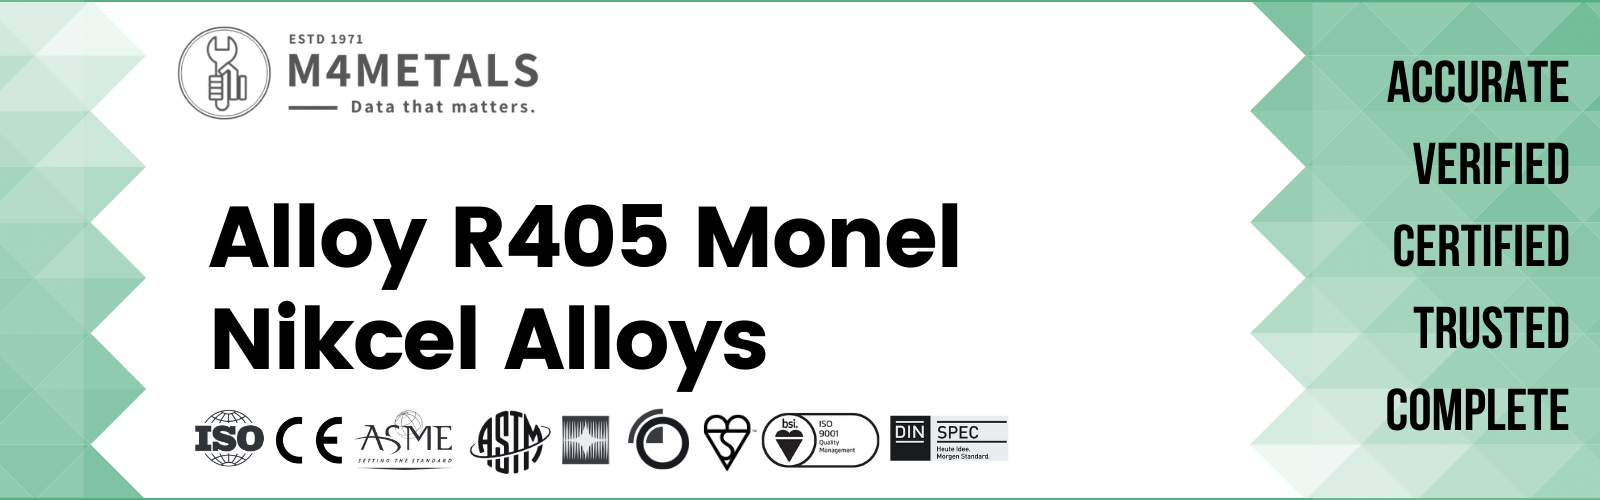 Monel Alloy R405